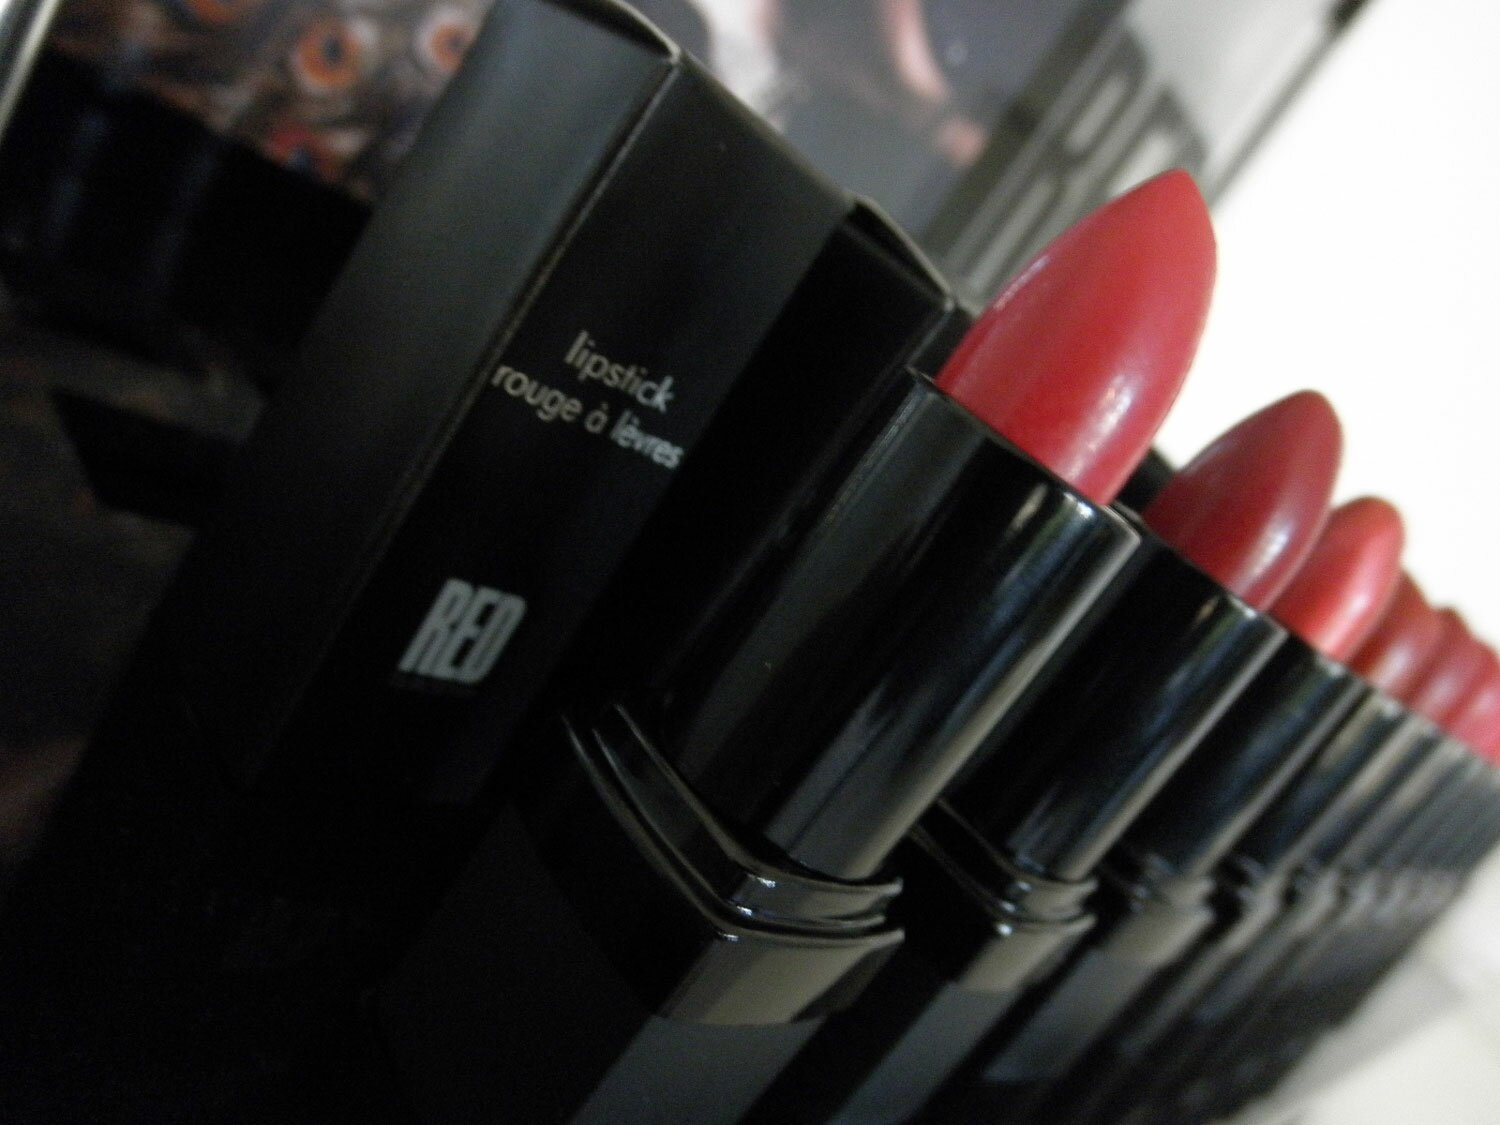 RED Burlesque lipsticks